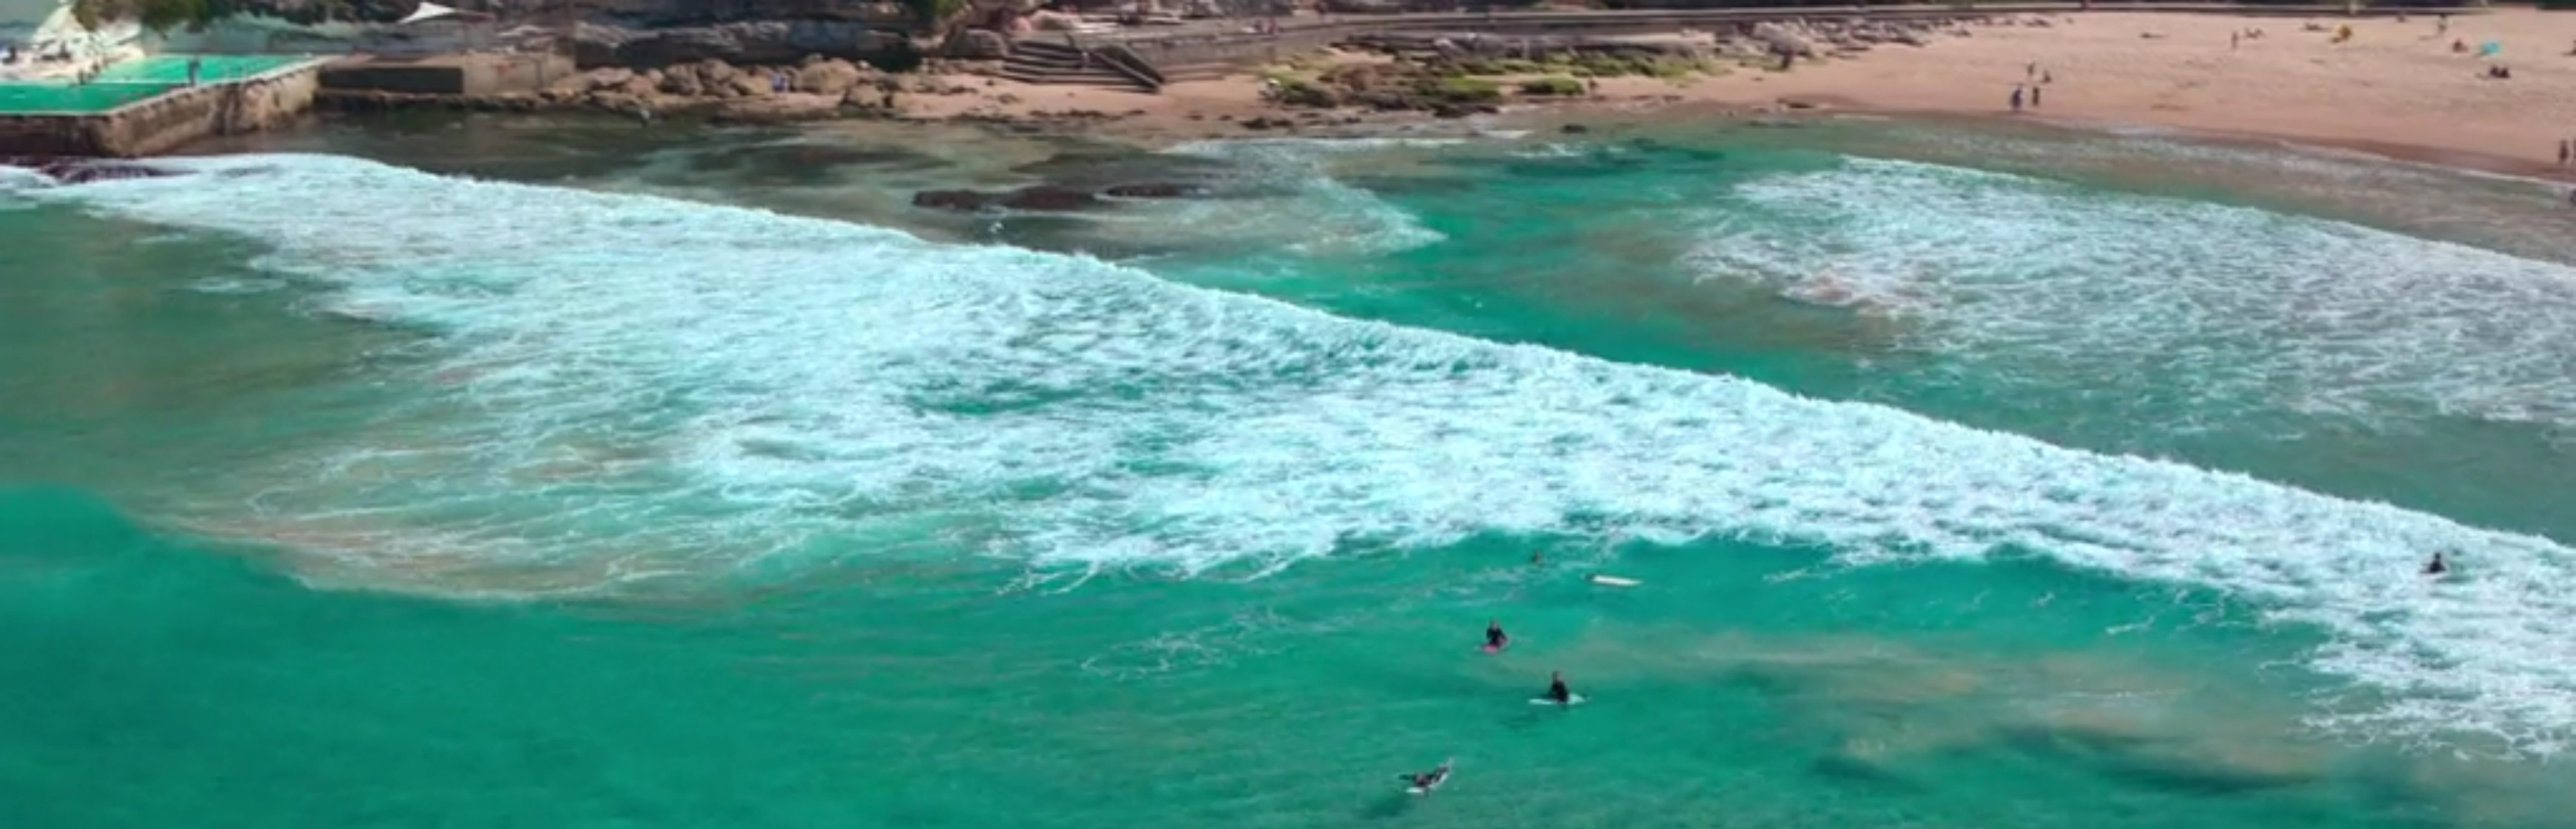 The surf off Sydney.